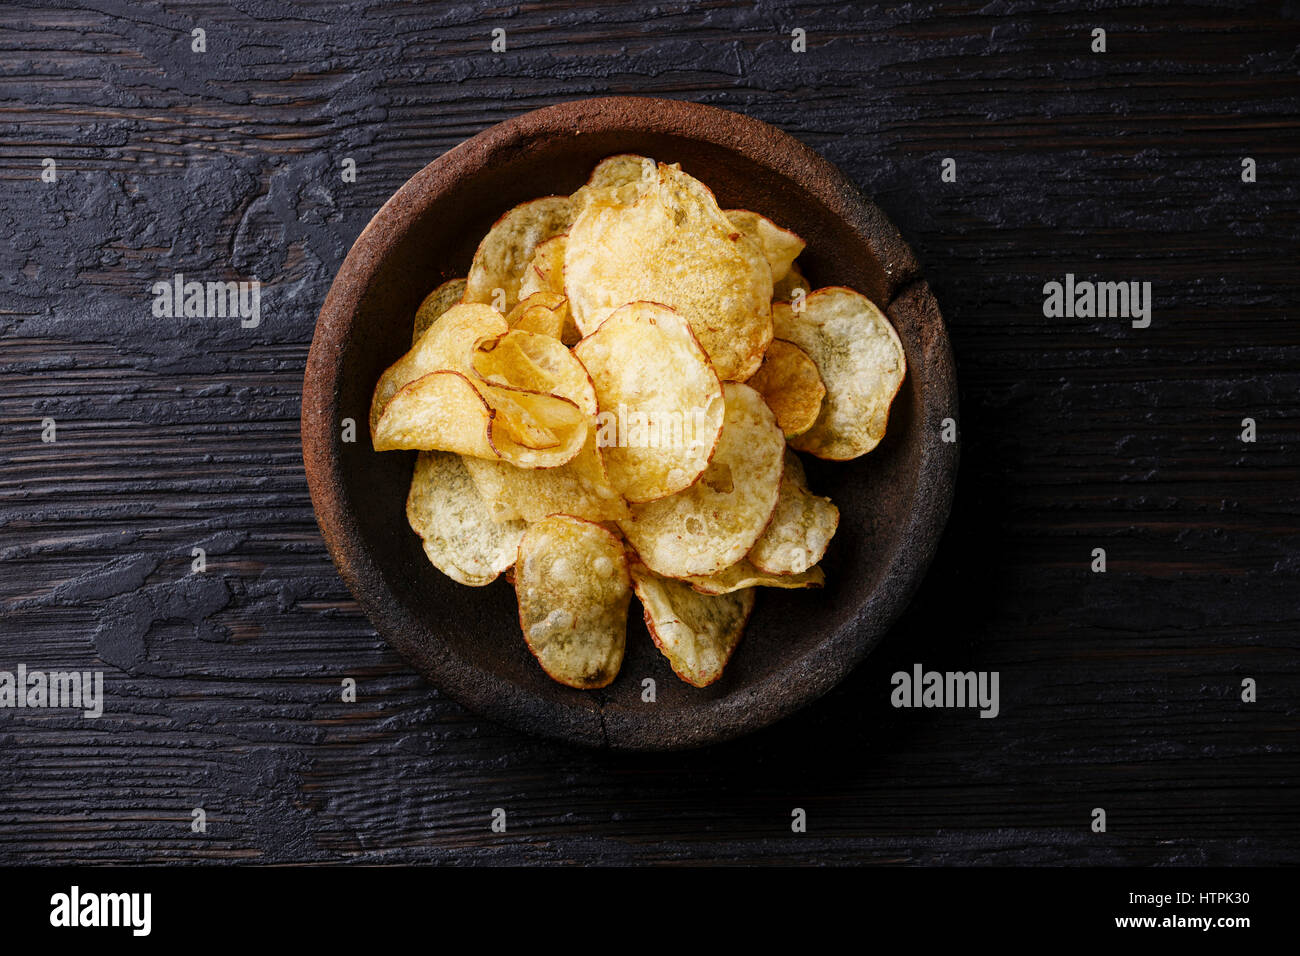 Crujientes patatas fritas caseras sobre fondo negro quemado de madera Foto de stock